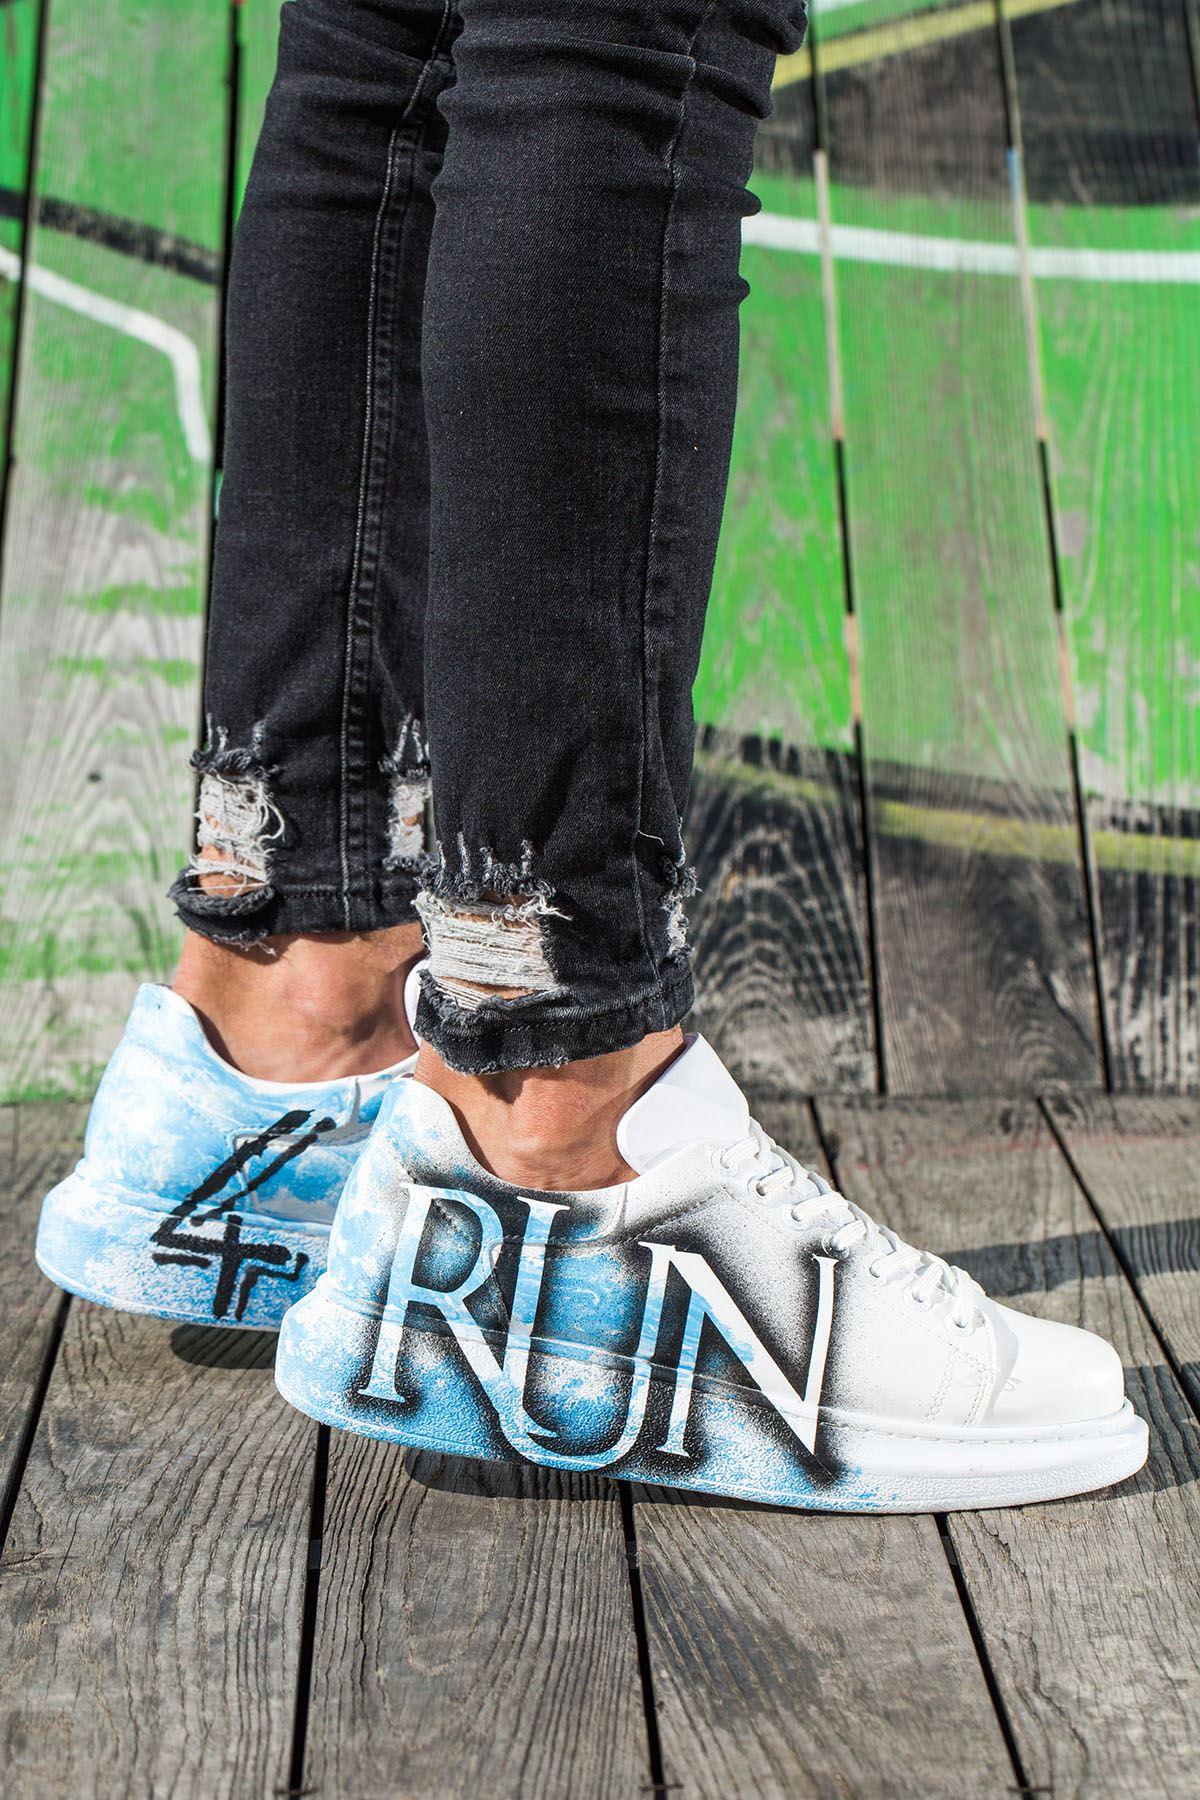 CH254 BT Men's Unisex Sneakers Shoes 418 Blue RUN - STREET MODE ™